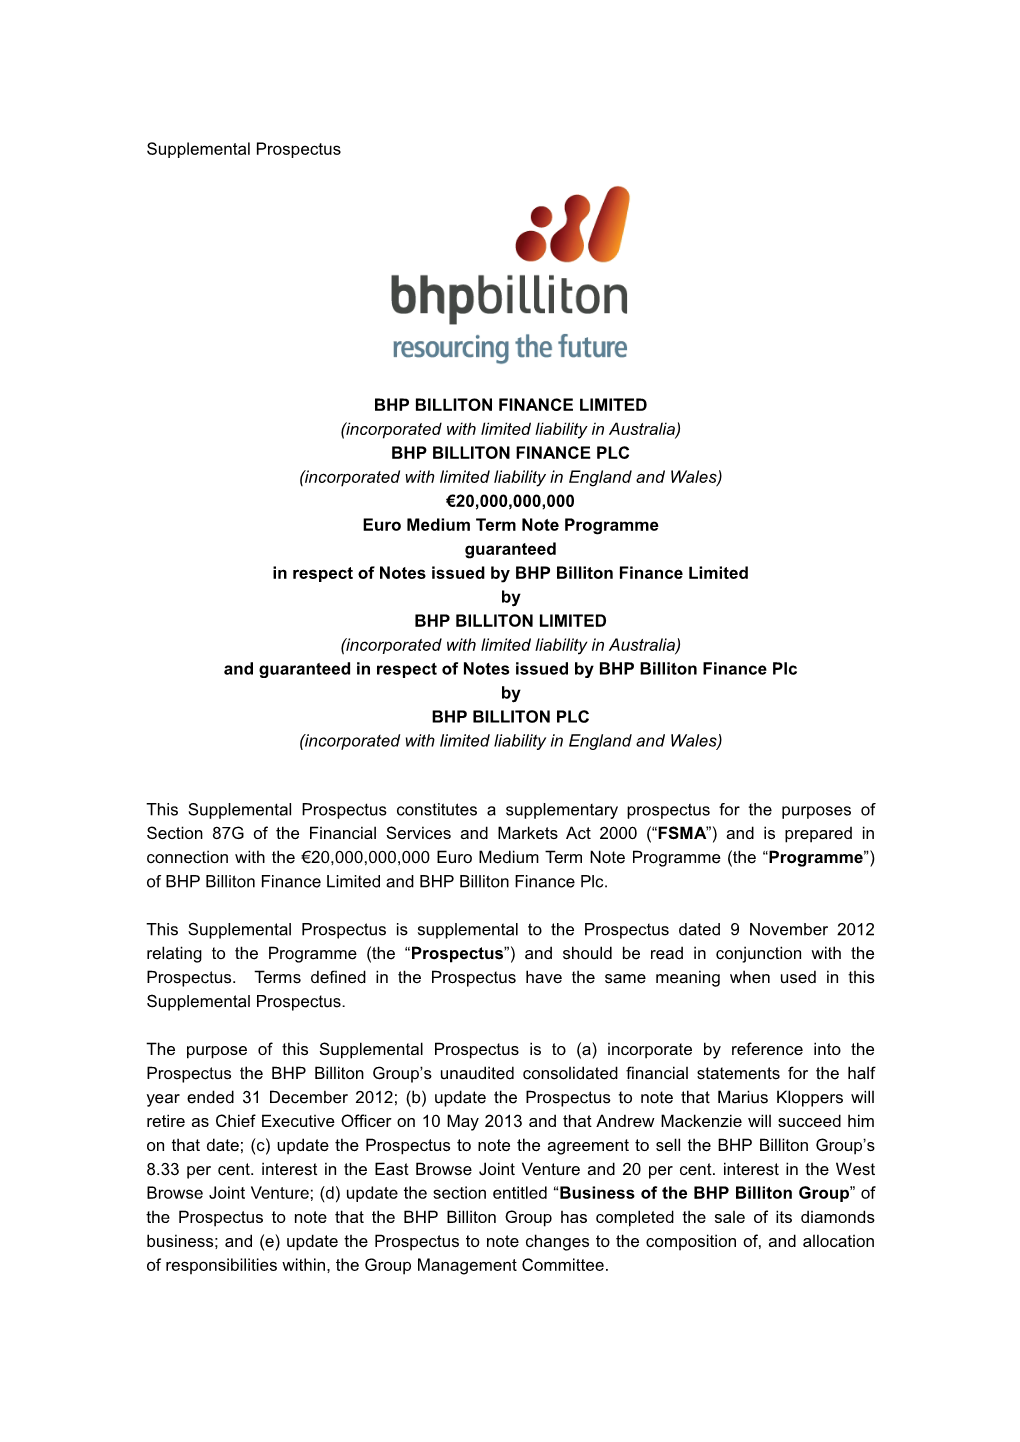 BHP Billiton Supplementary Prospectus 515157108 12.DOC